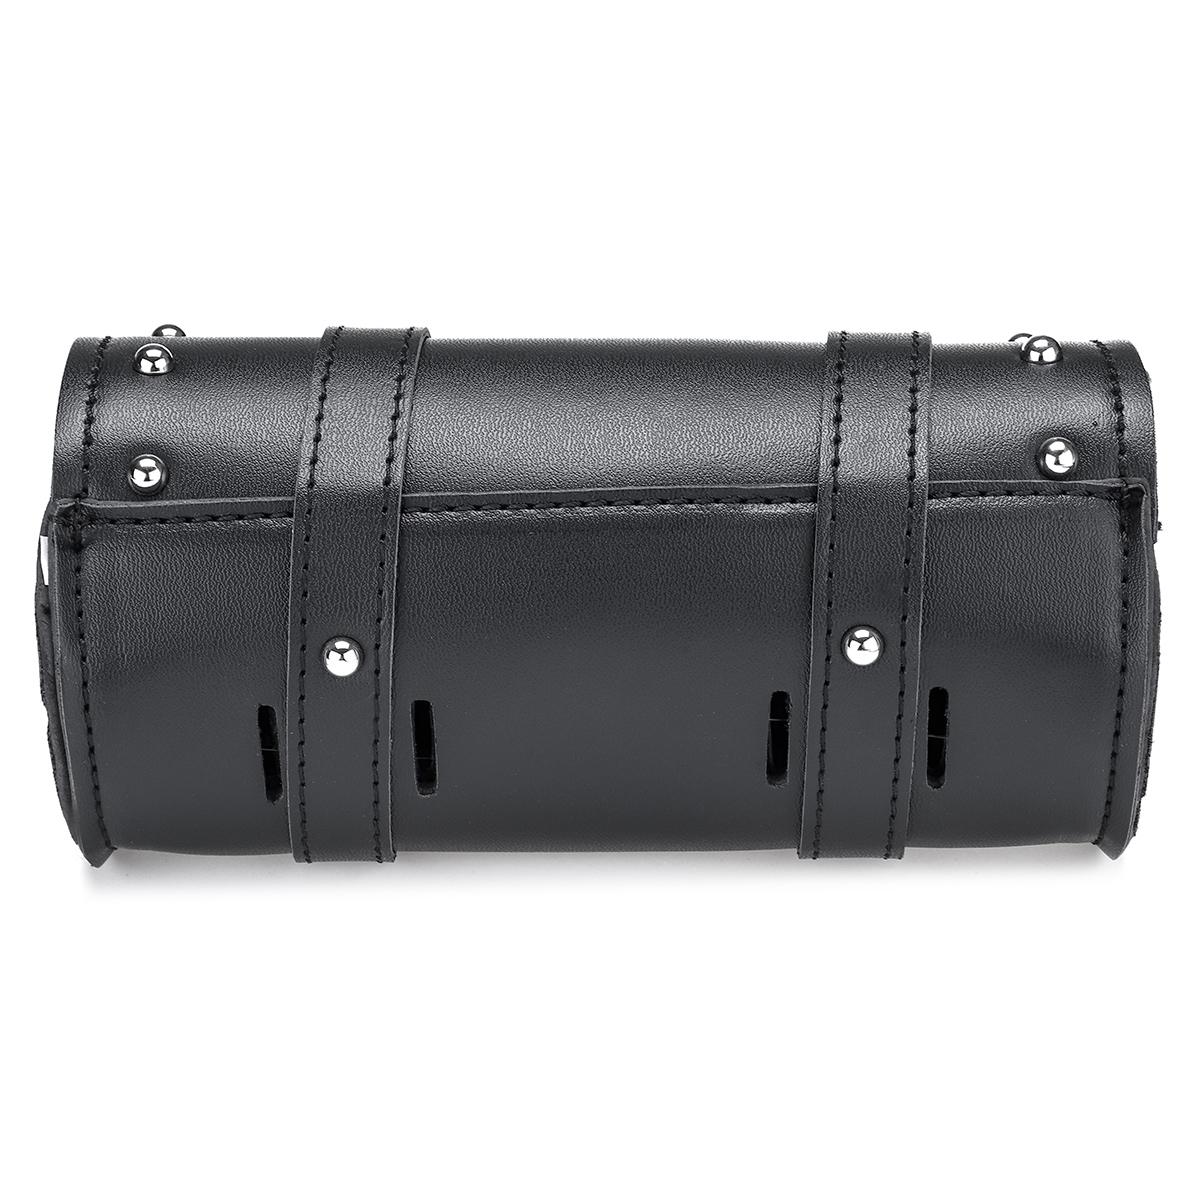 Universal Black PU Leather Motorcycle Saddle Bag Luggage Case Pannier Tool Bag